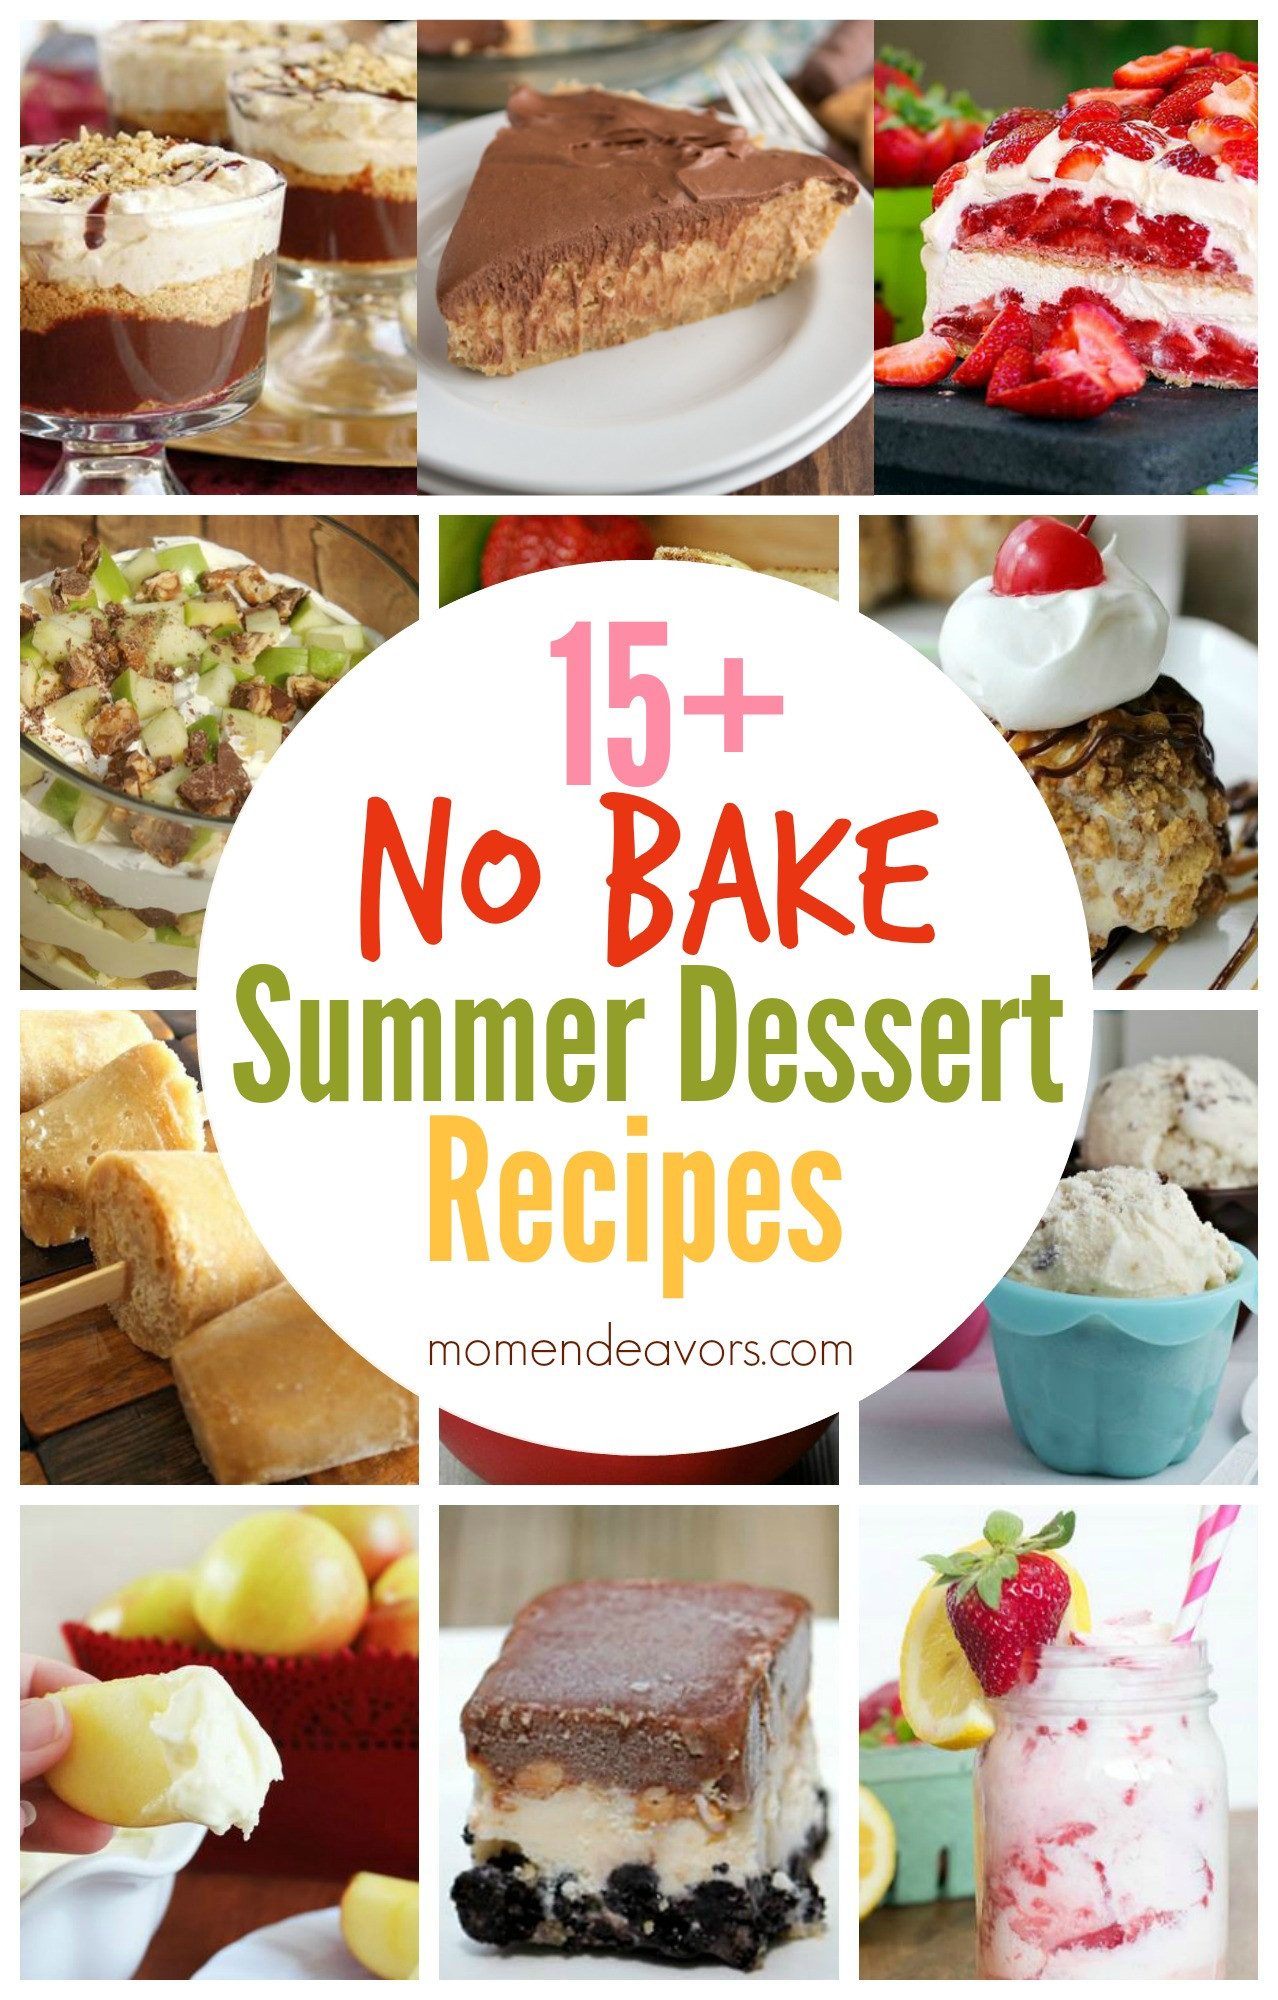 Easy No Bake Summer Desserts
 15 No Bake Summer Dessert Recipes